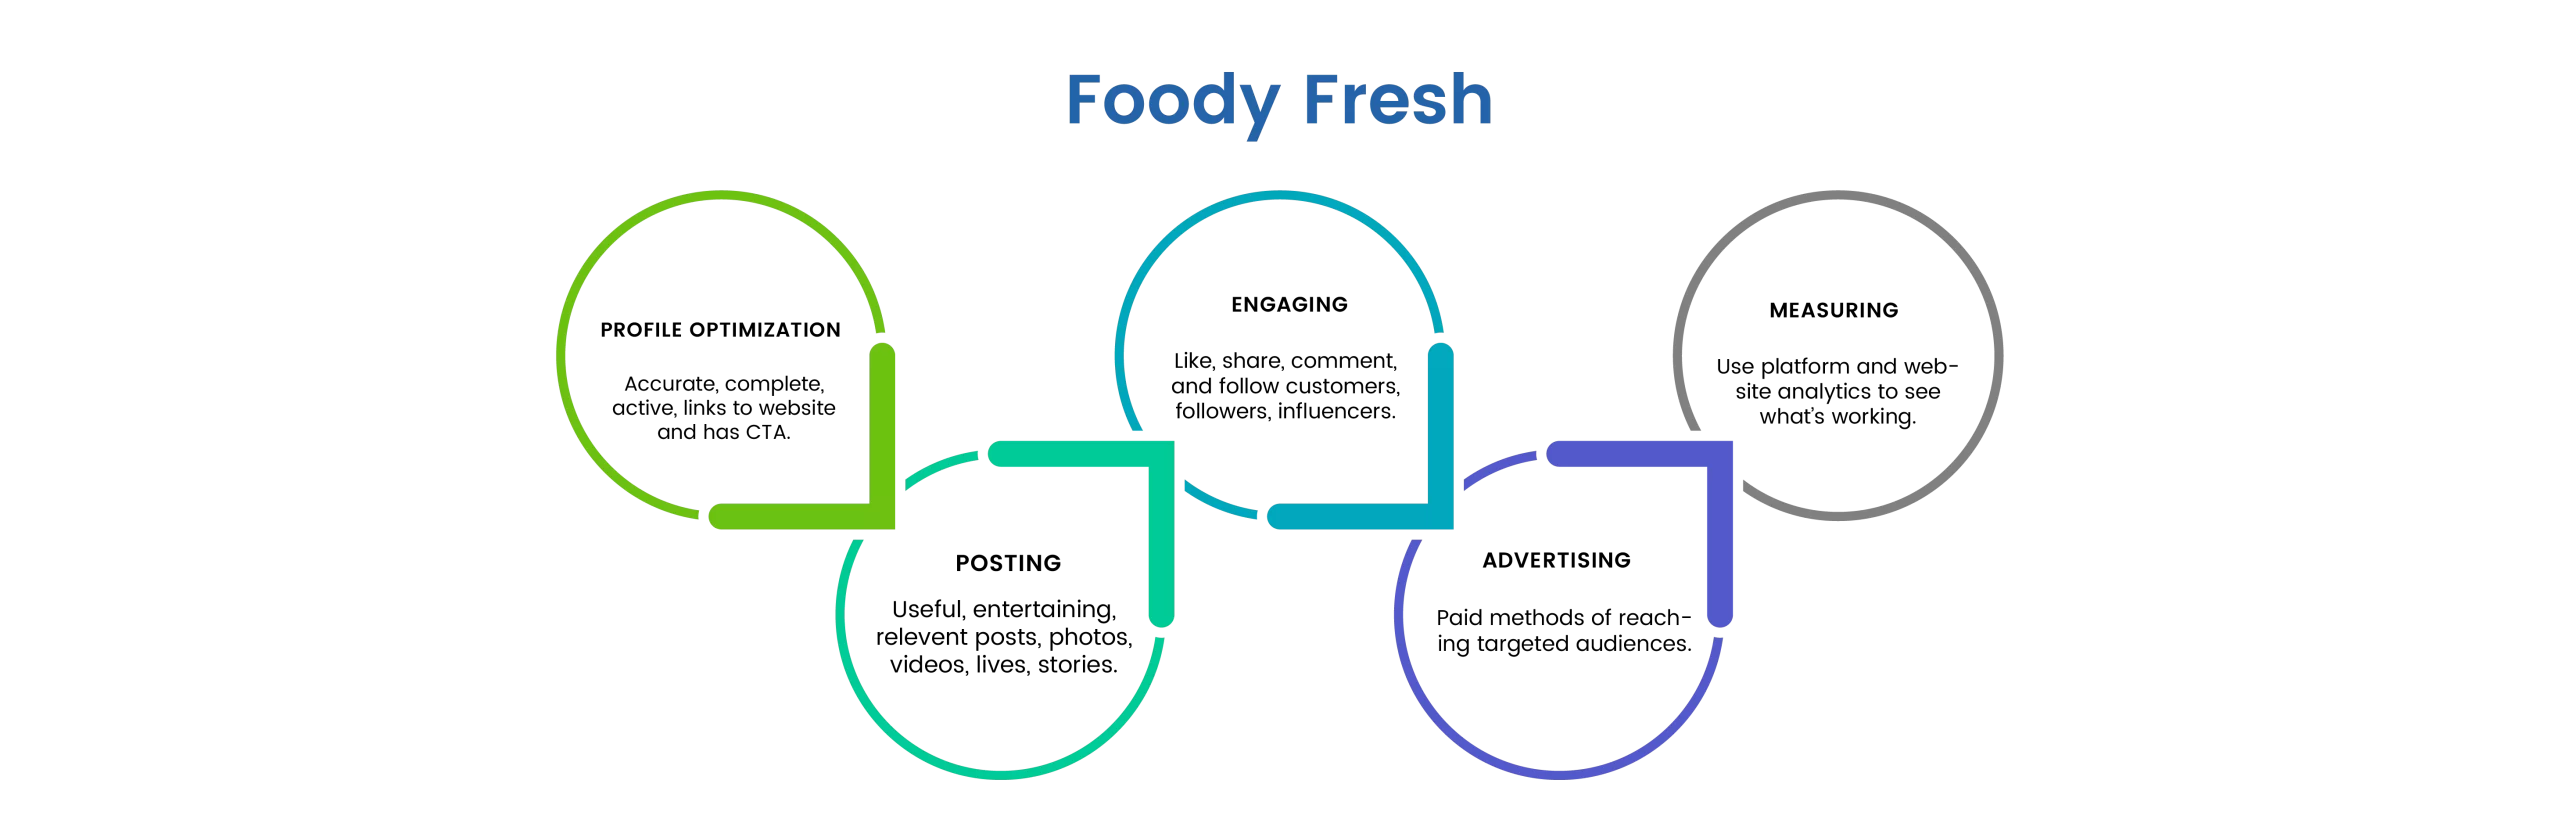 Foody Fresh Marketing Strategy